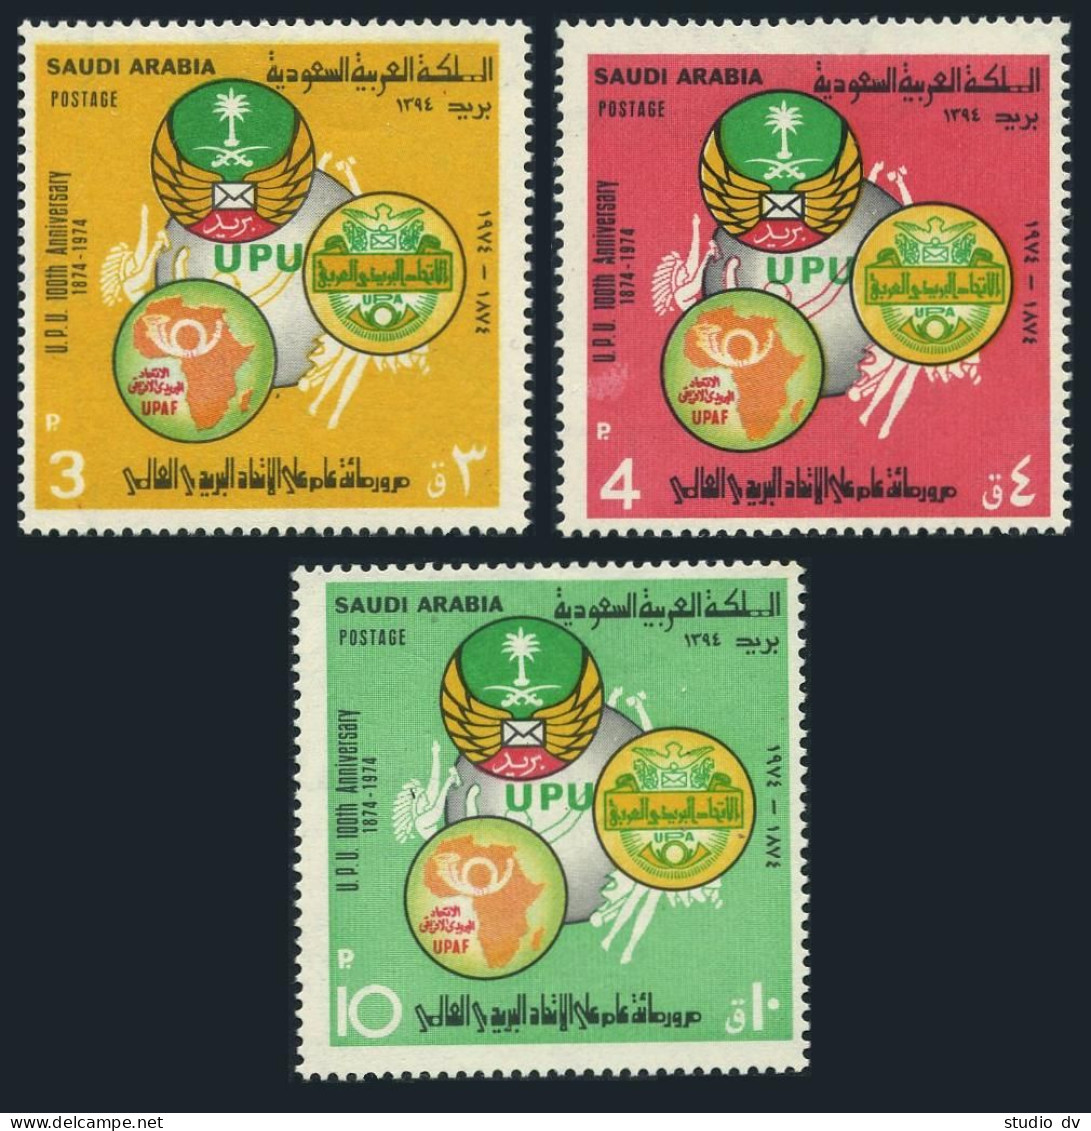 Saudi Arabia 645-647, MNH. Michel 554-556. UPU-100, 1974. Arab Postal Emblem. - Arabie Saoudite